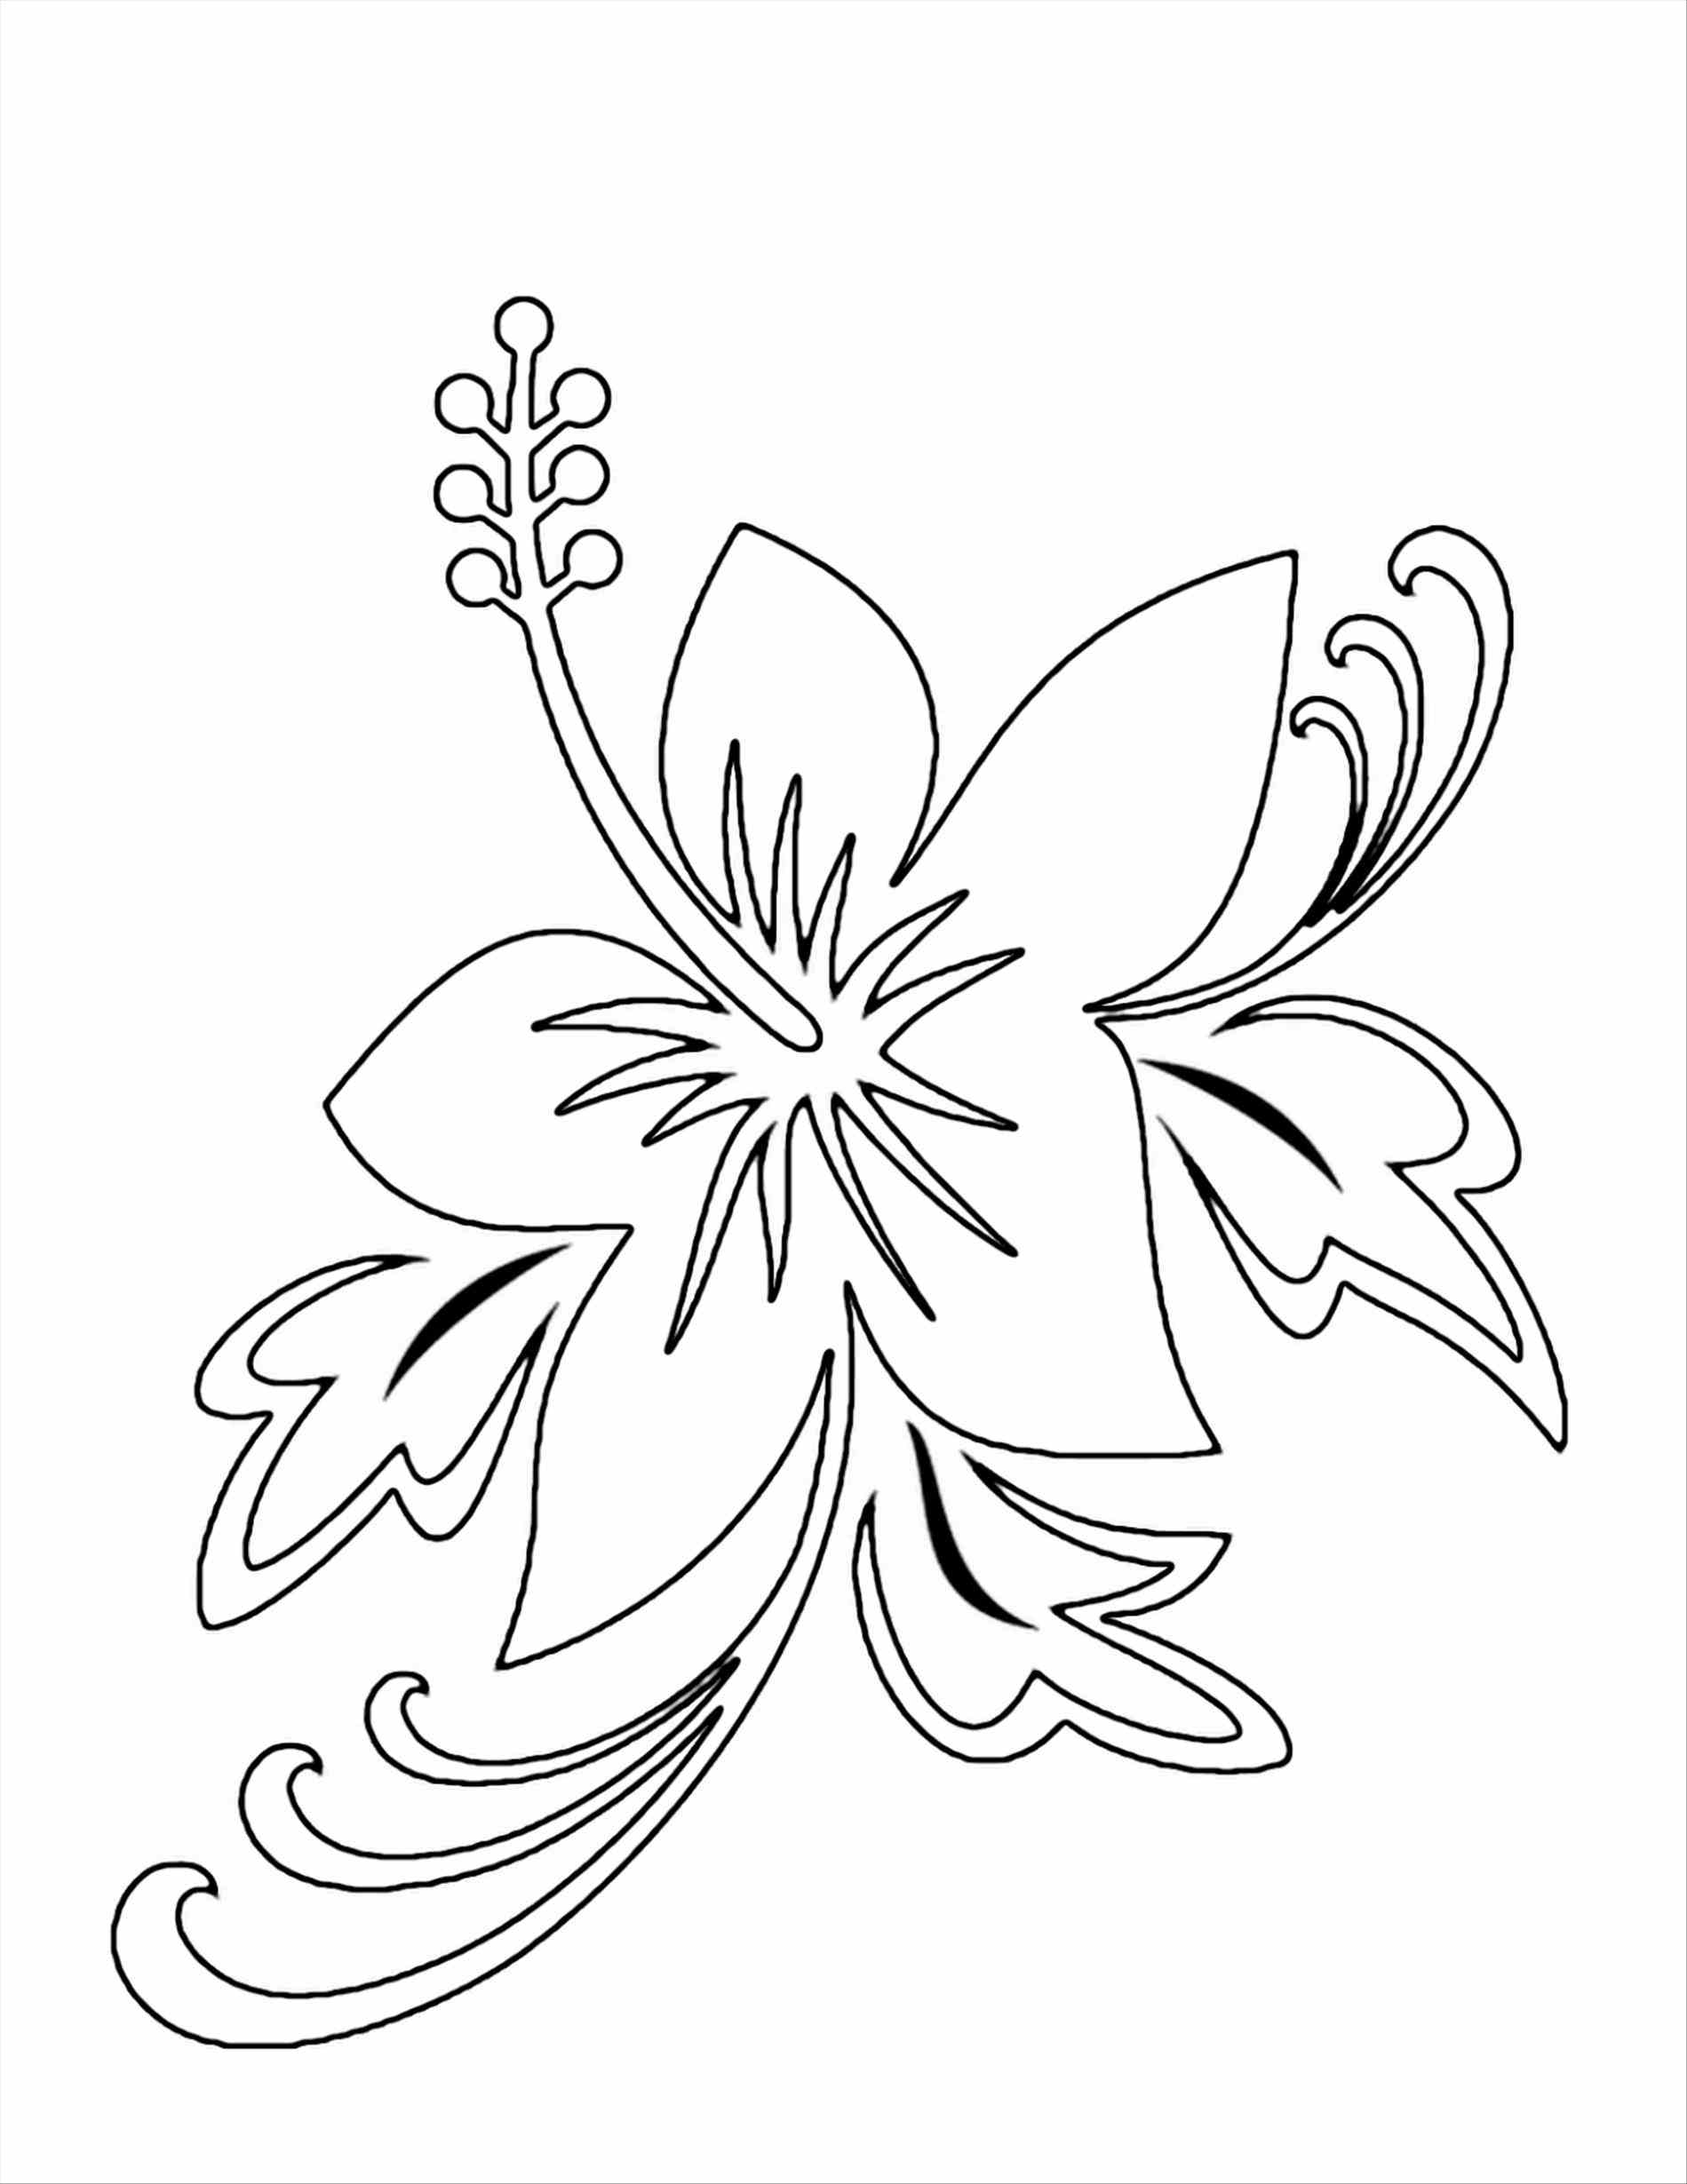 let-s-doodle-coloring-book-bing-images-flower-coloring-sheets-printable-flower-coloring